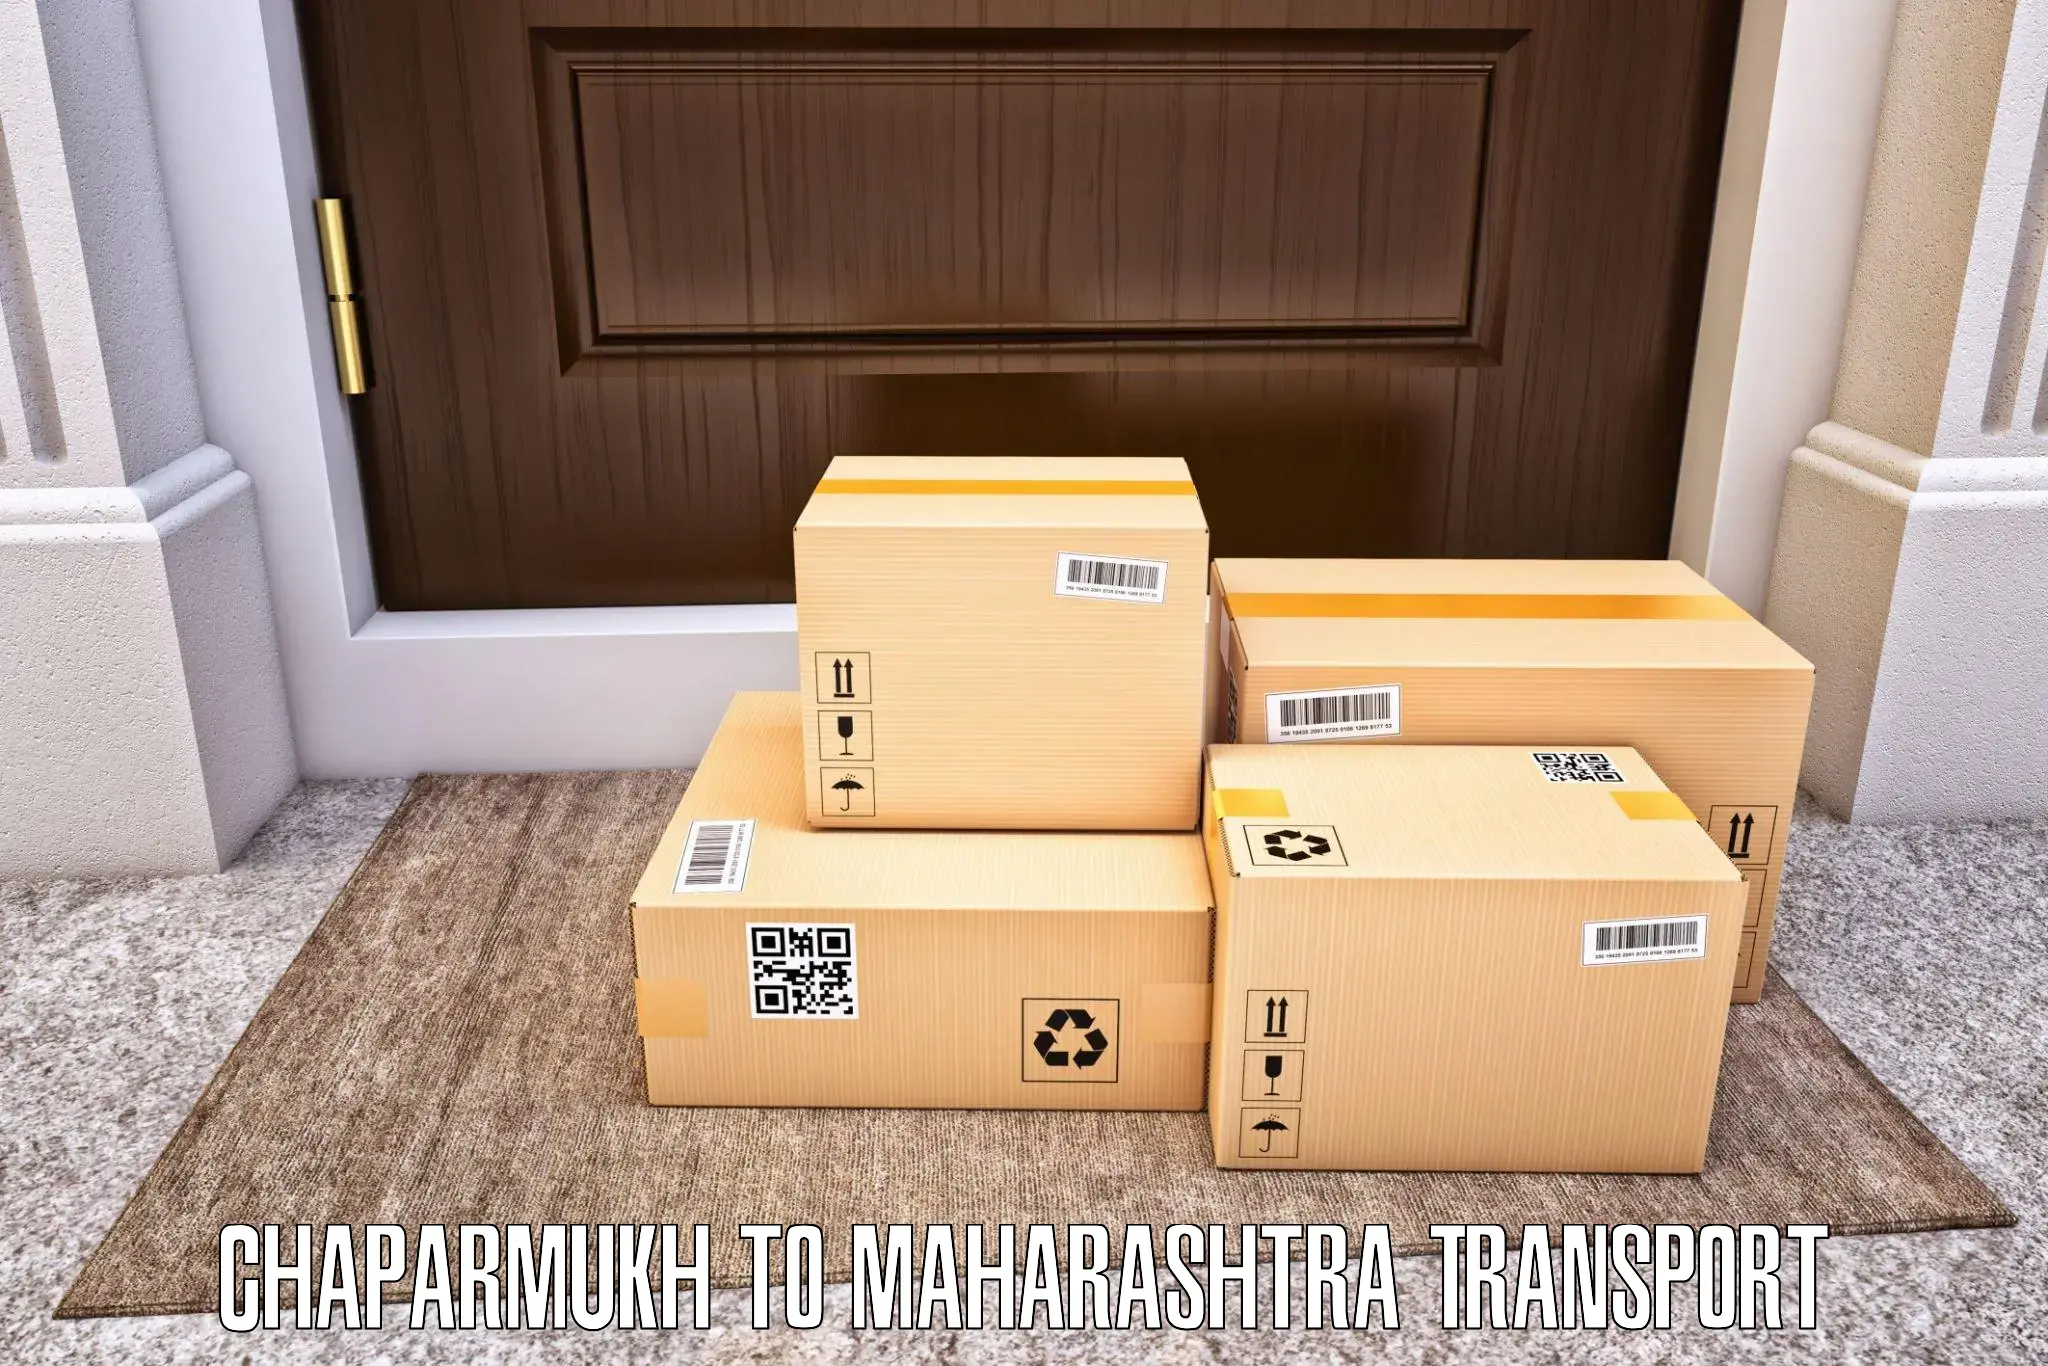 Two wheeler parcel service Chaparmukh to Wani